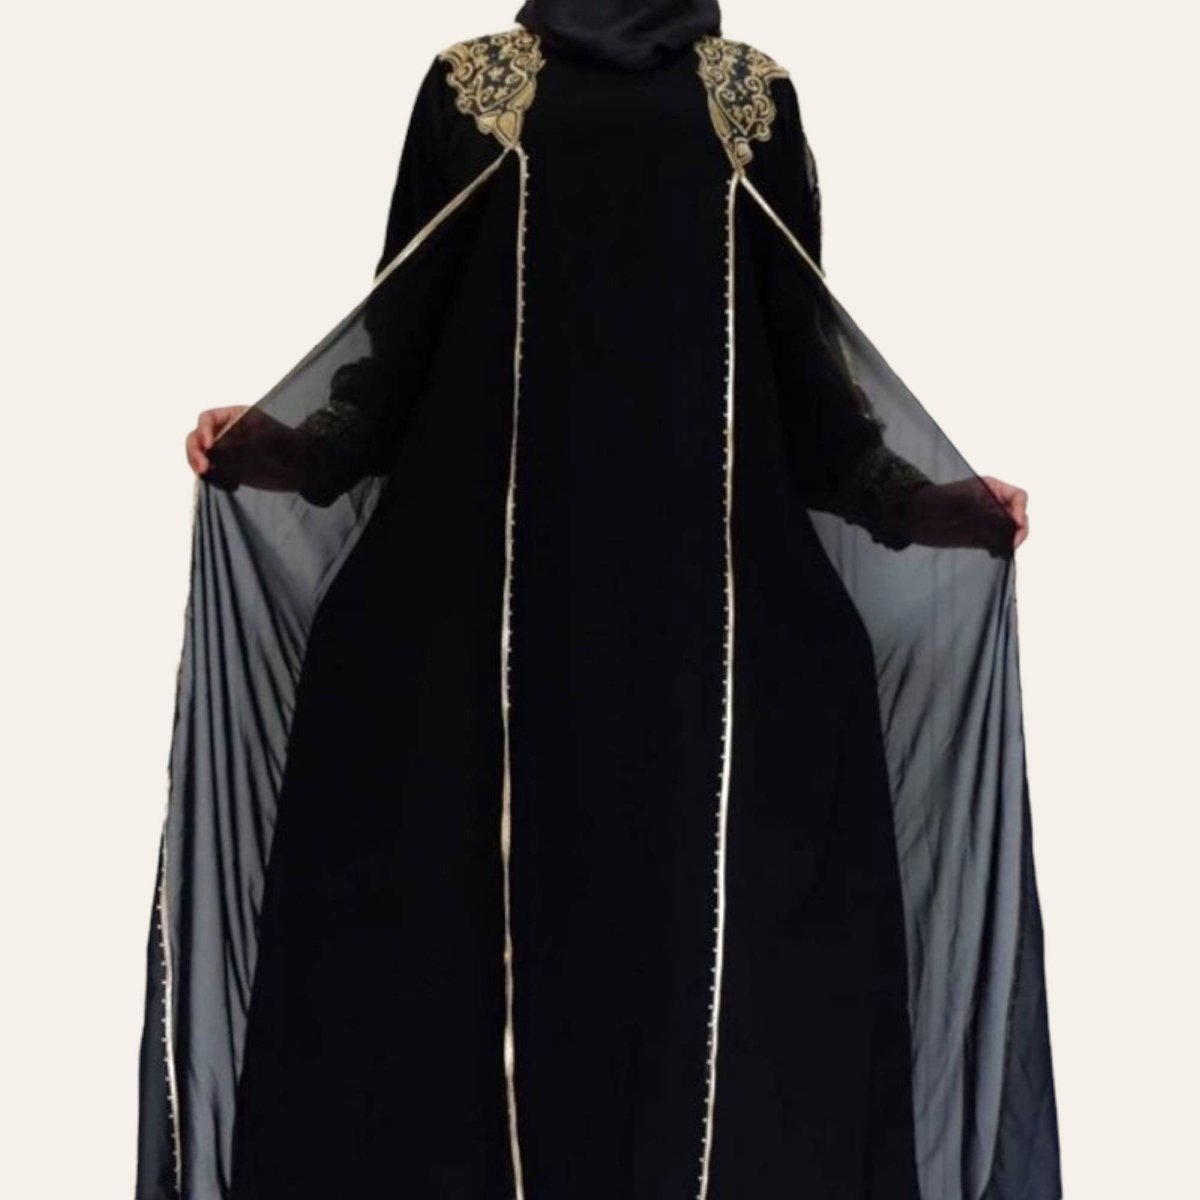 Black Abaya Outer Dubai for Women Muslim